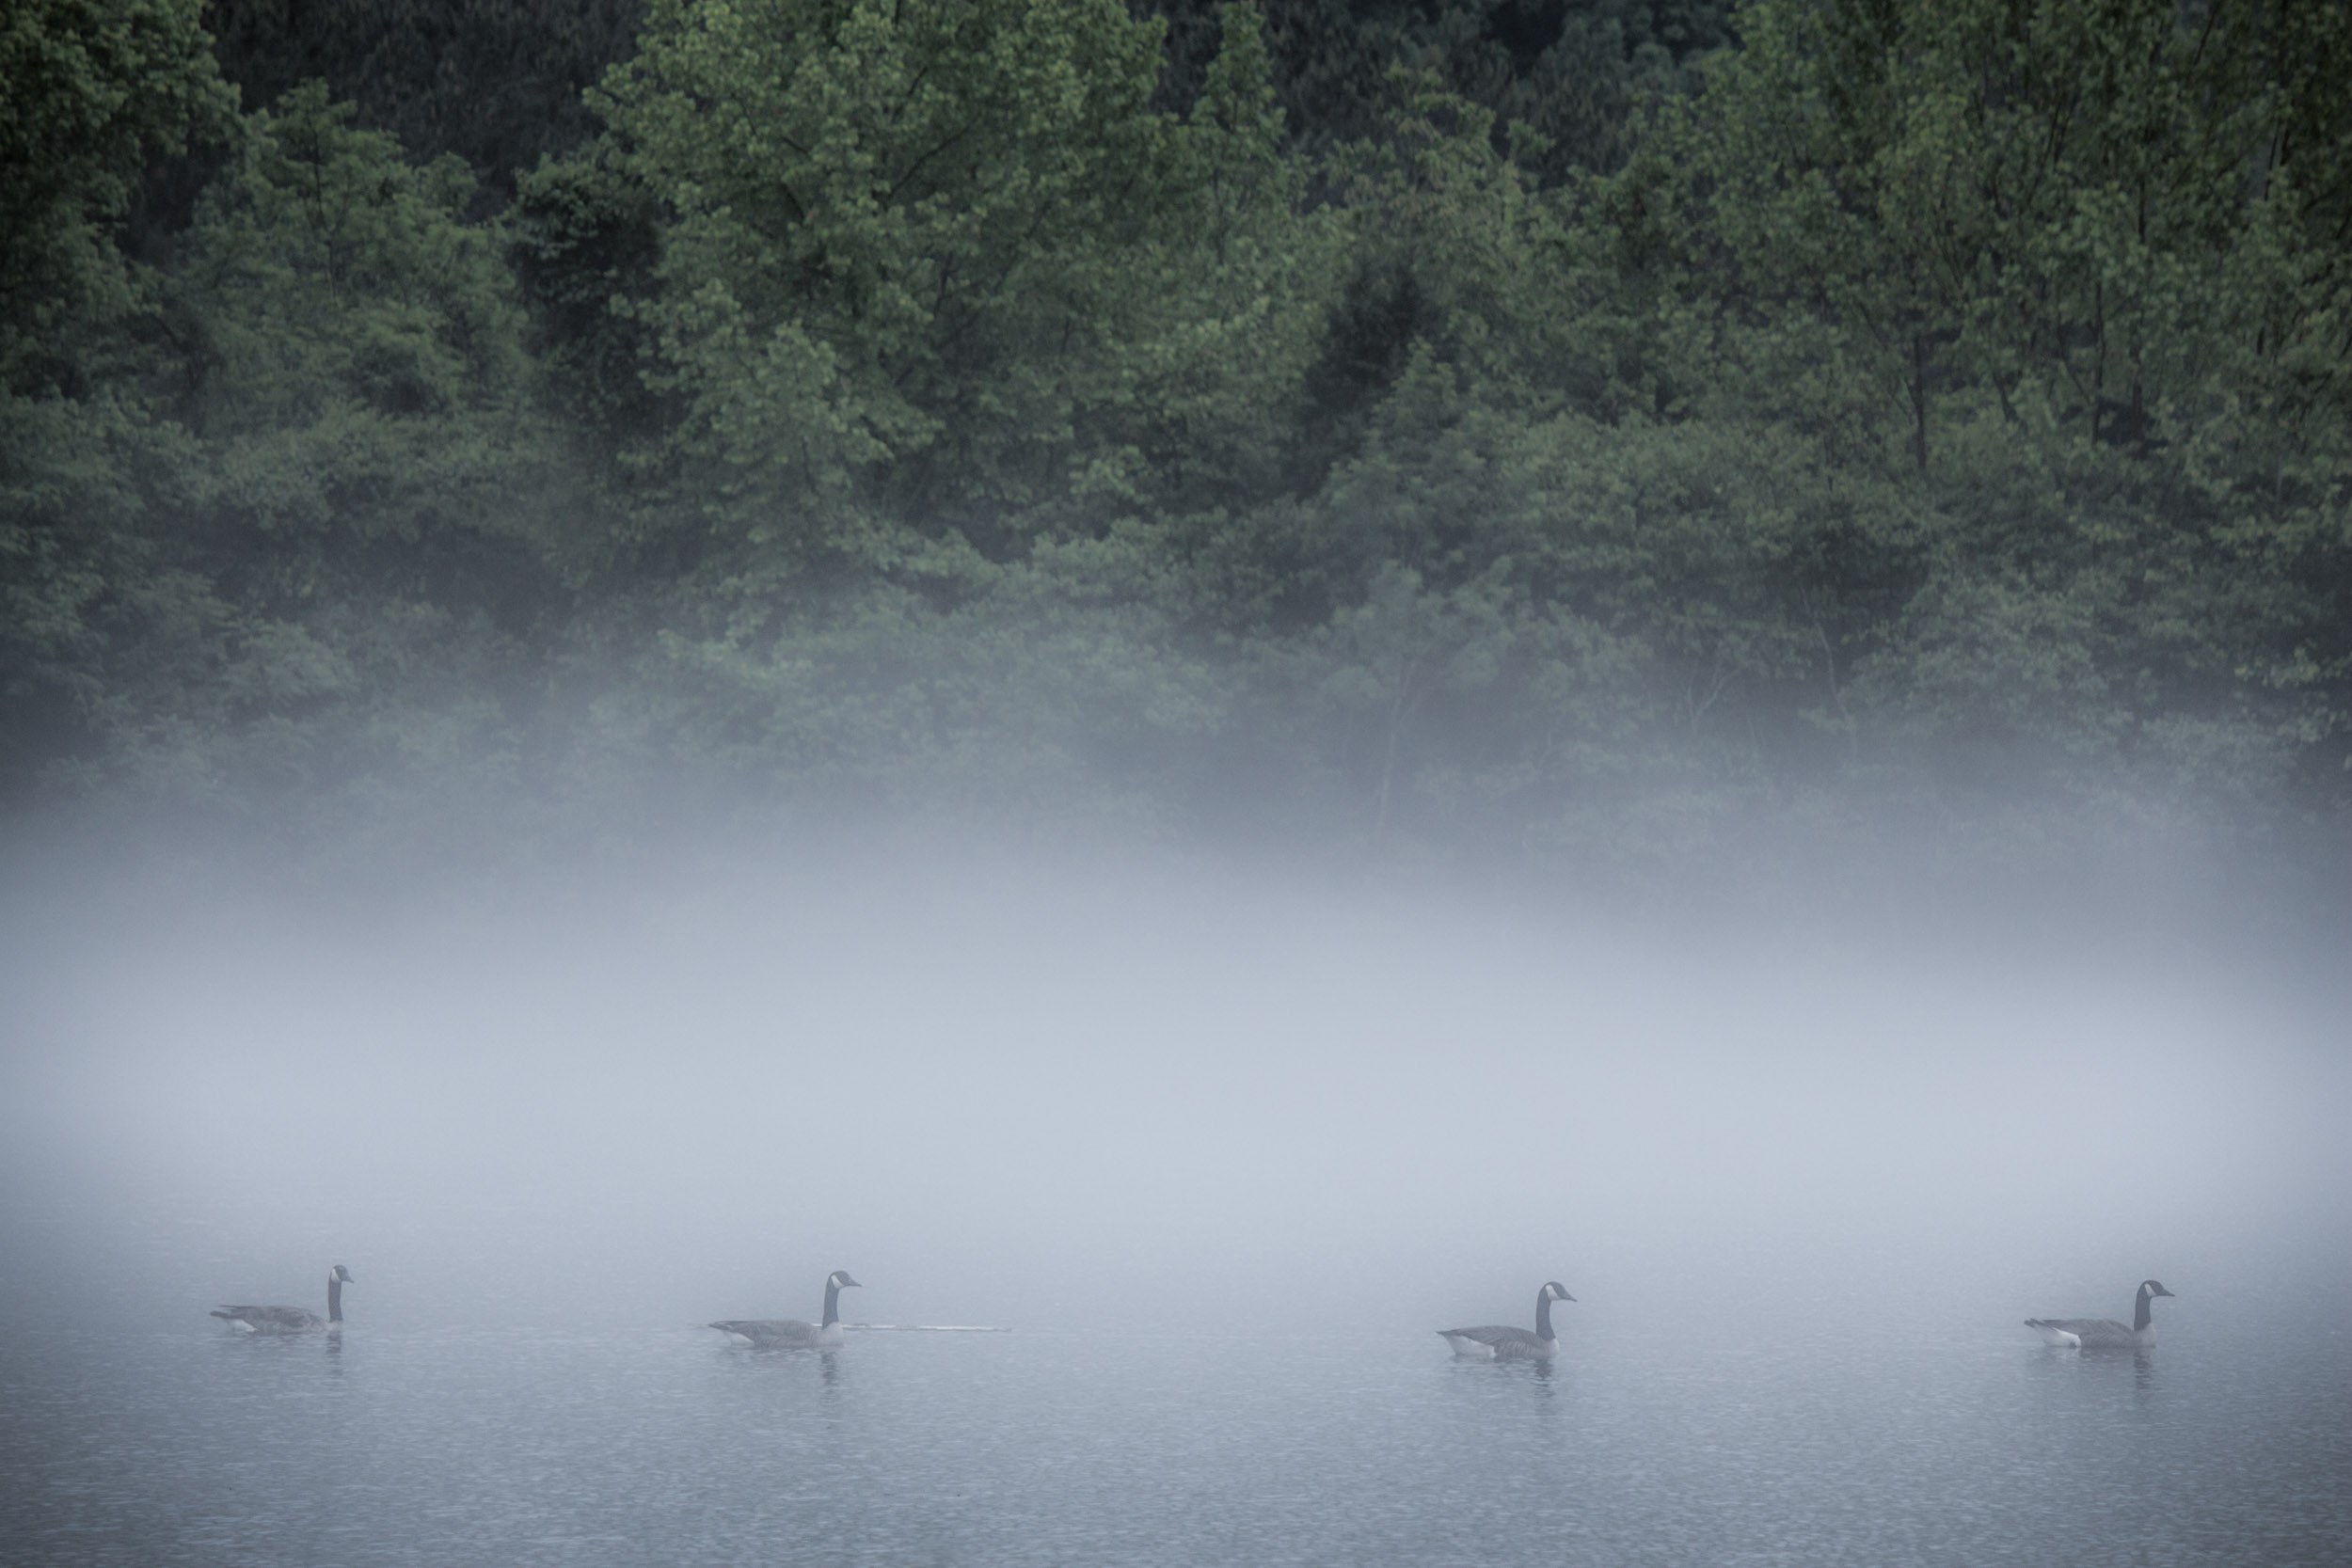 Geese fog lake photo by Ron Hautau.jpg